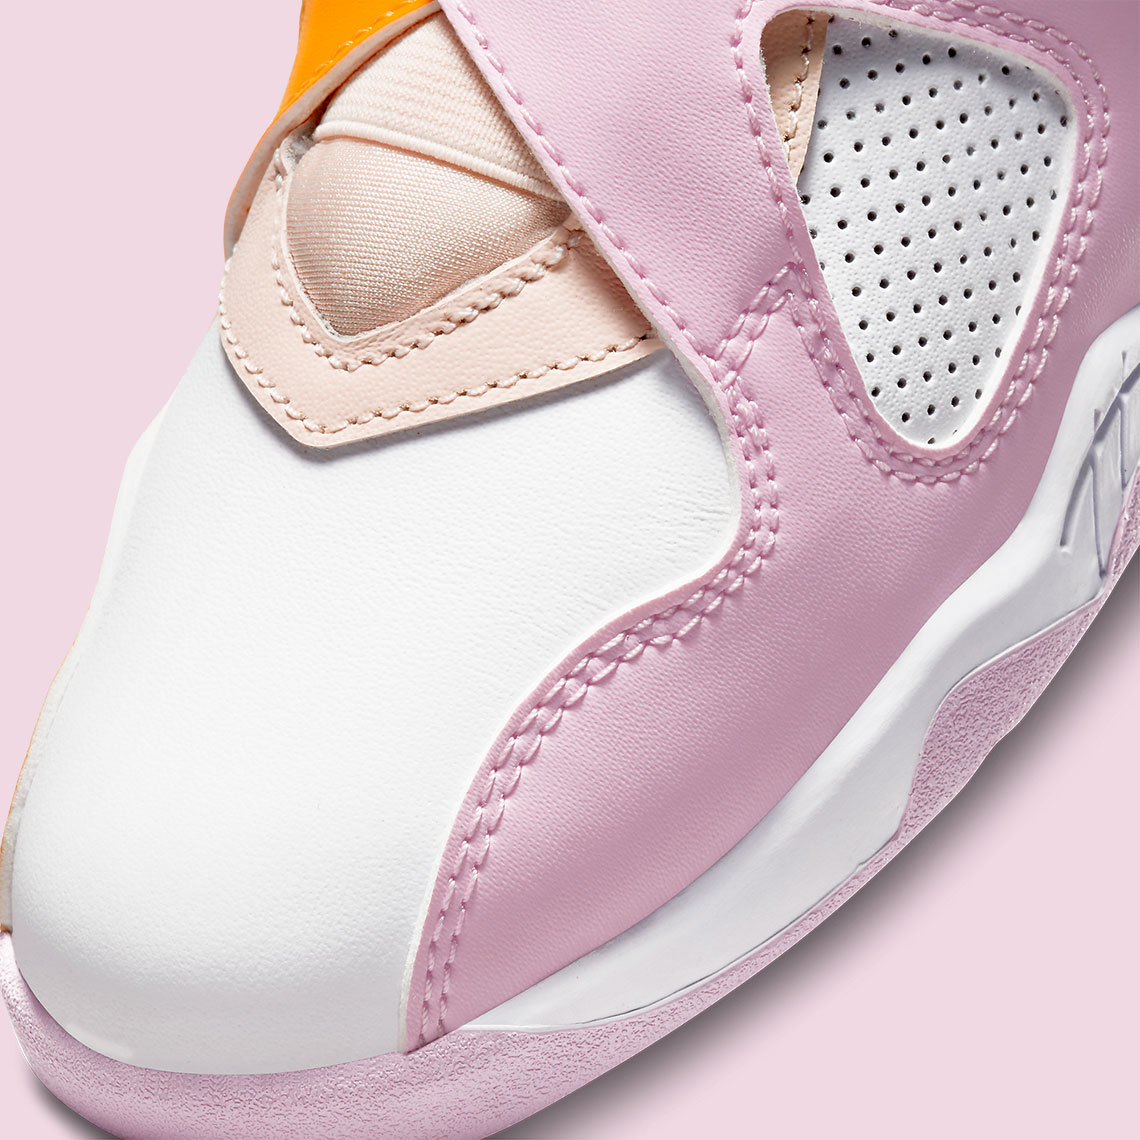 Nike Jordan Series Women's Shoes Ps 580529 816 5